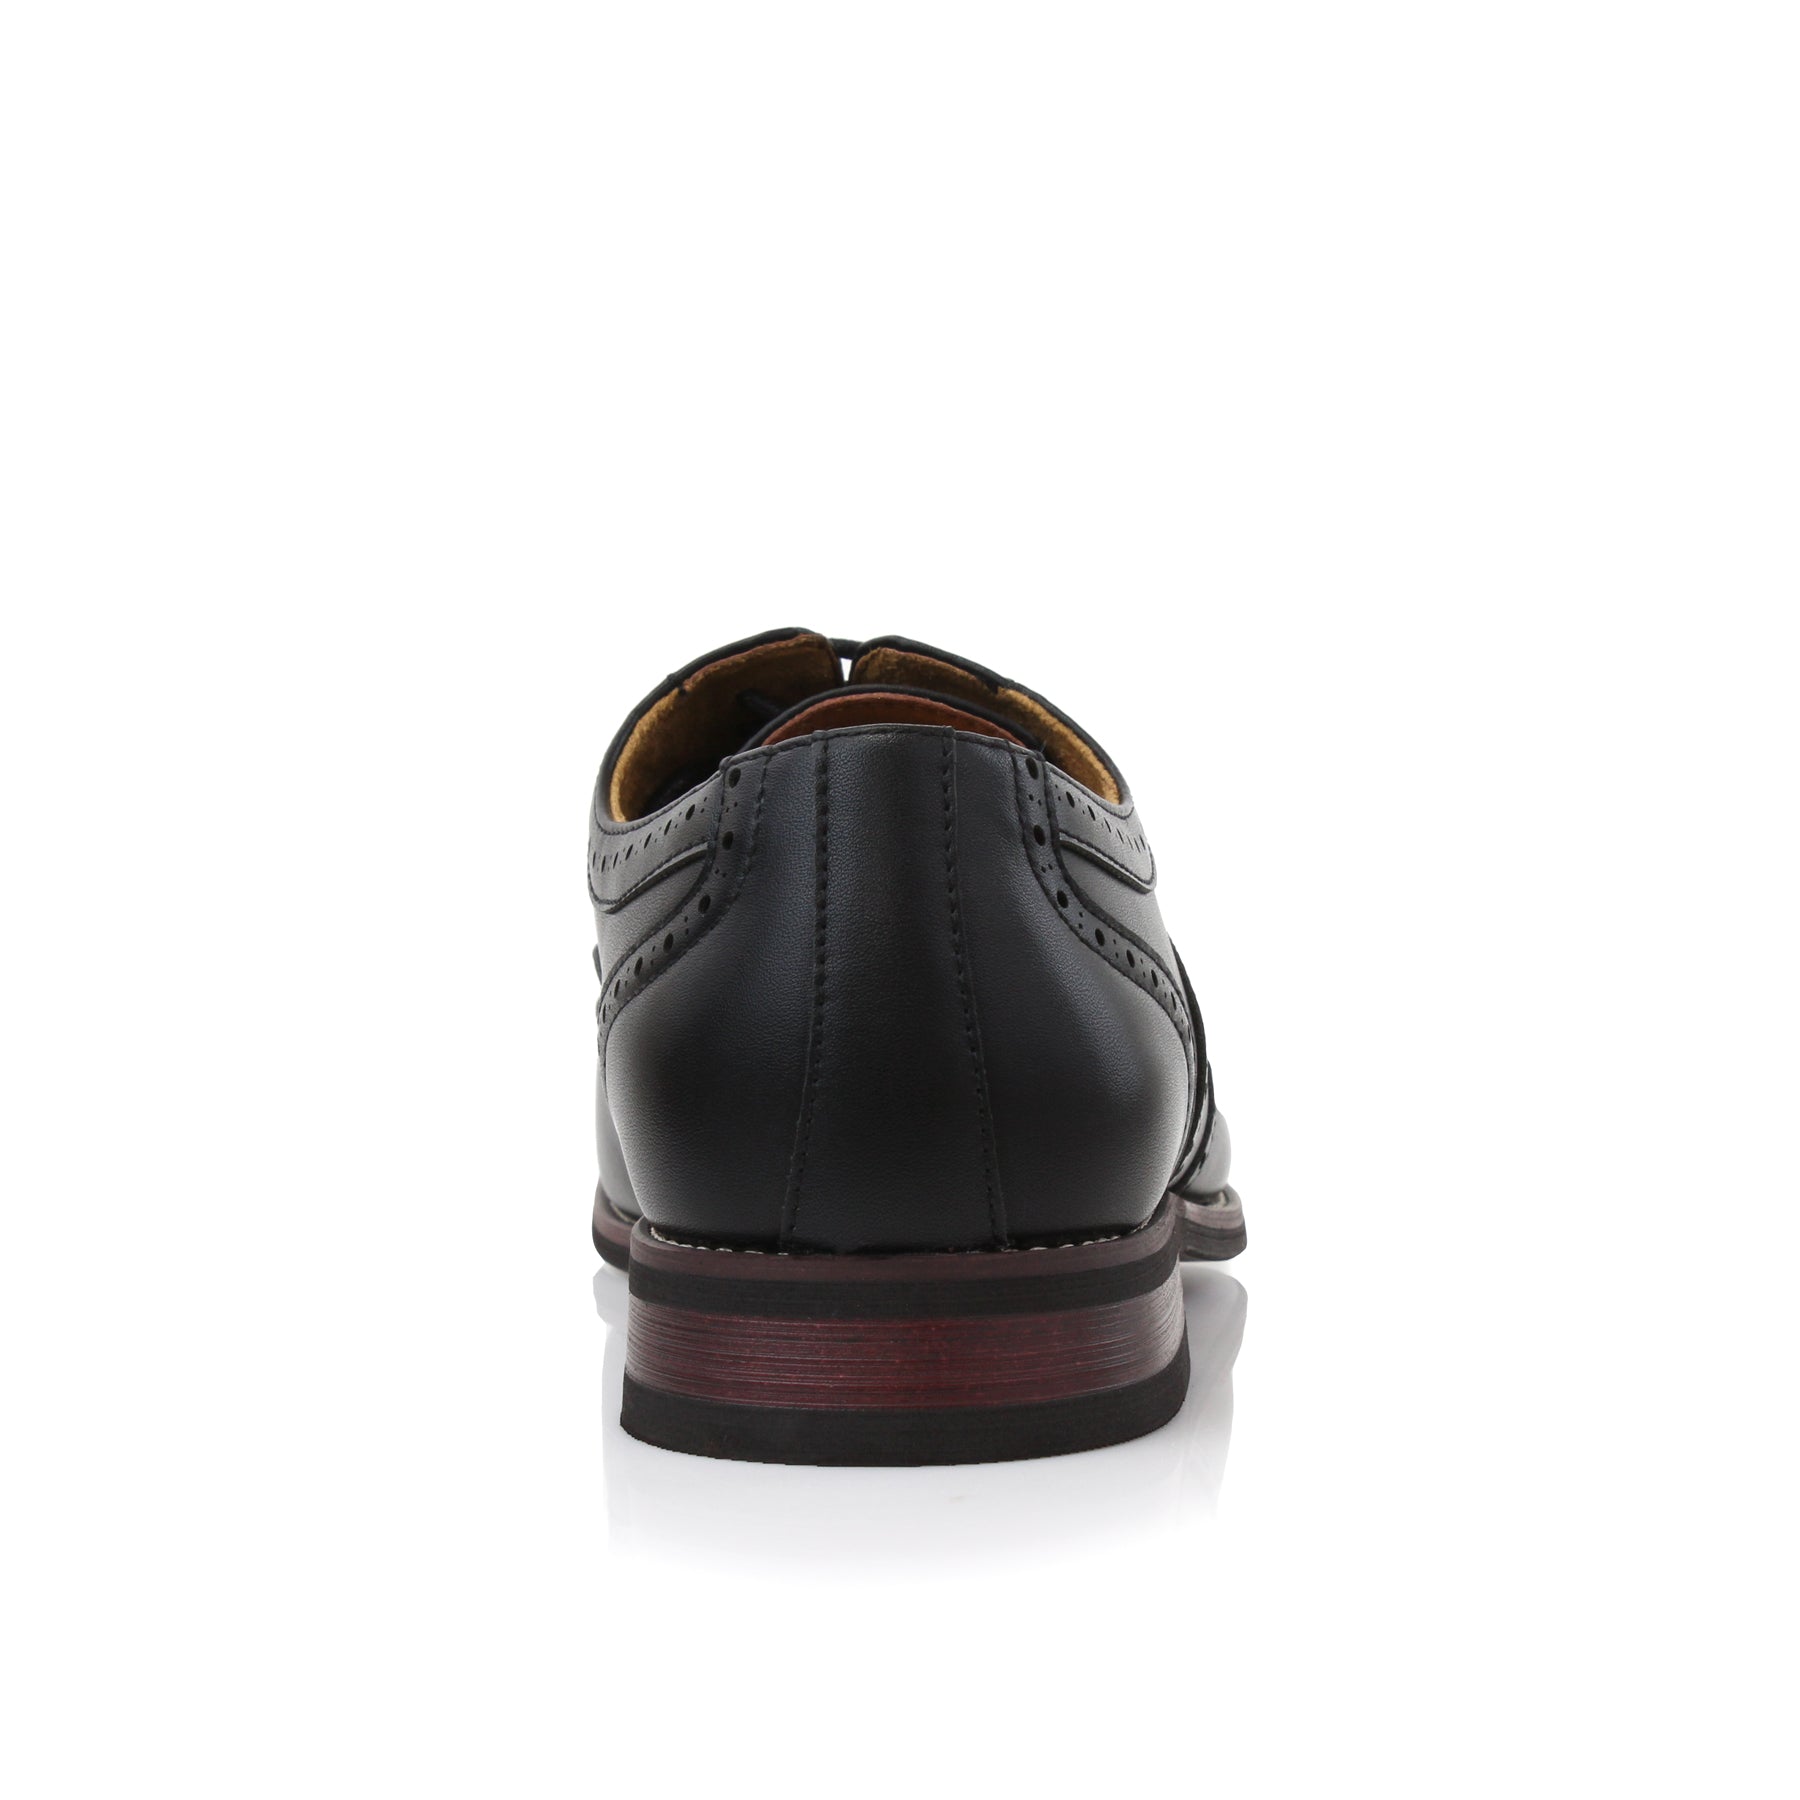 Brogue Wingtip Oxfords | Arthur by Ferro Aldo | Conal Footwear | Back Angle View